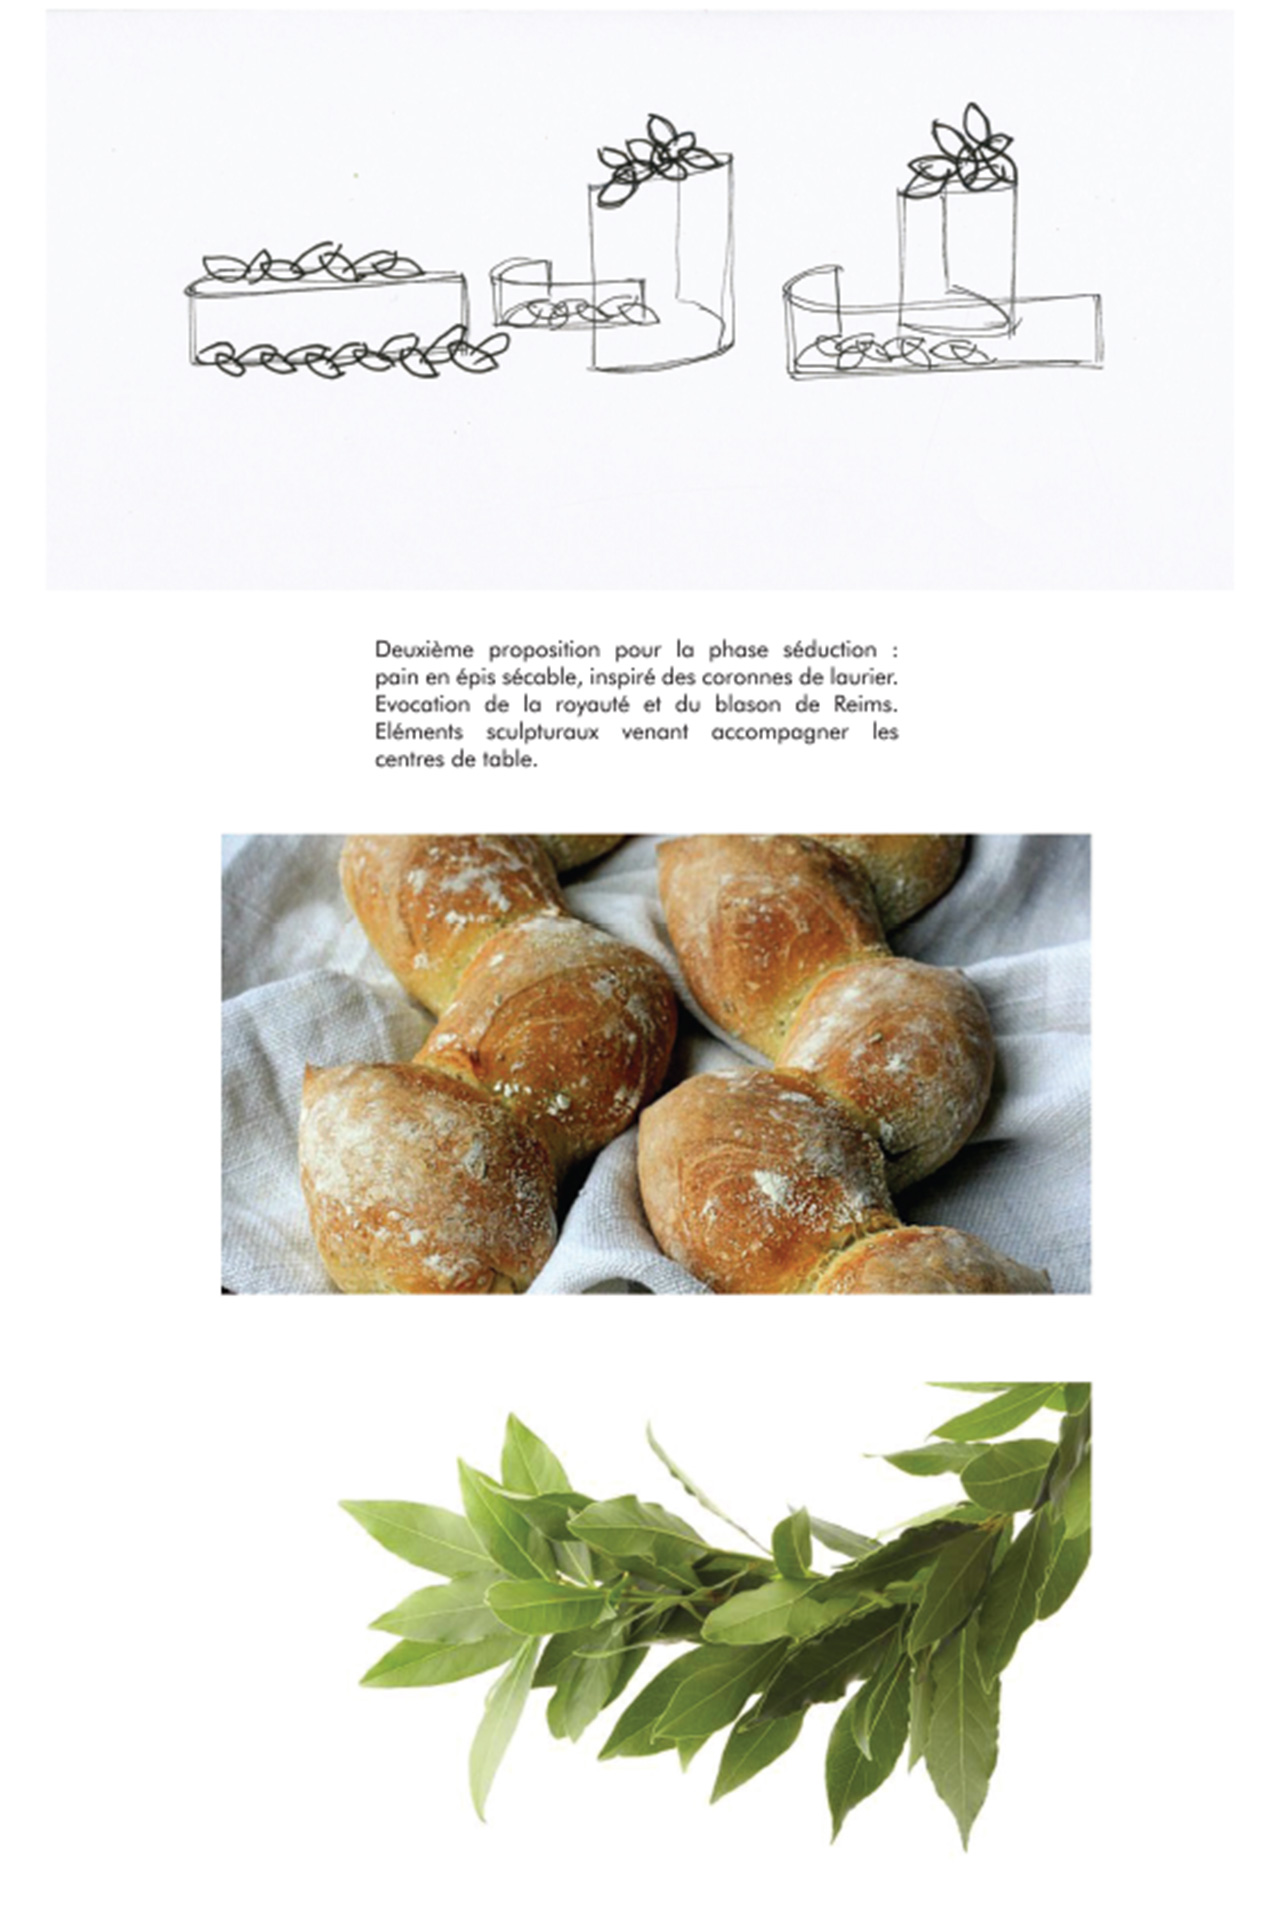 master_design_culinaire_food_banquet_scientifique_gastronomie_diplomatie_recherche_12